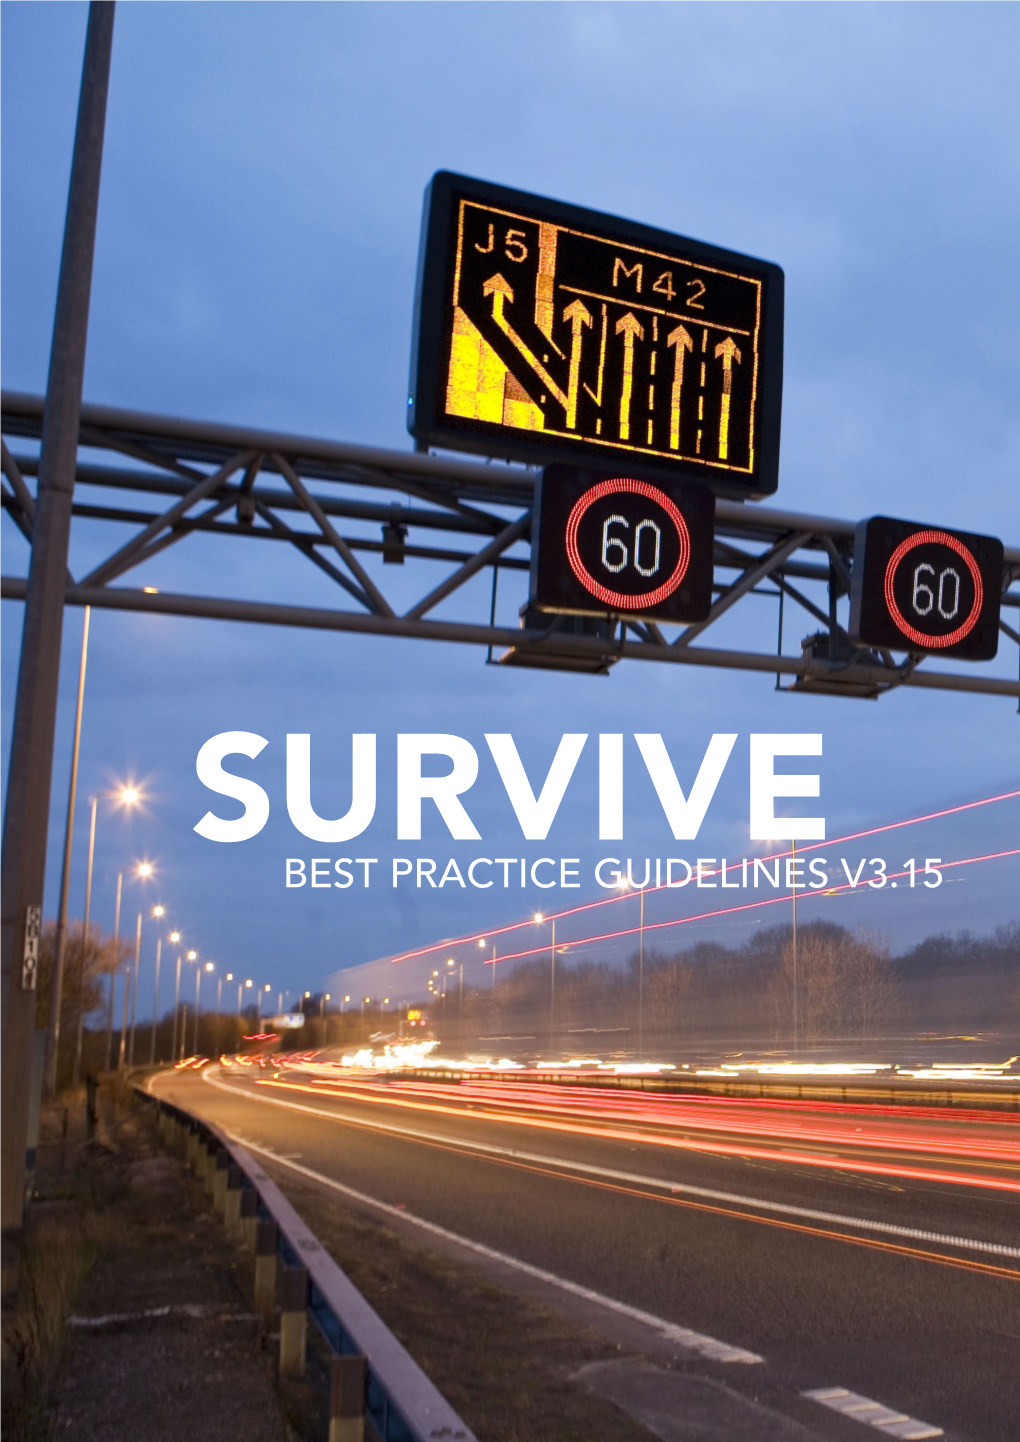 Best Practice Guidelines V3.15